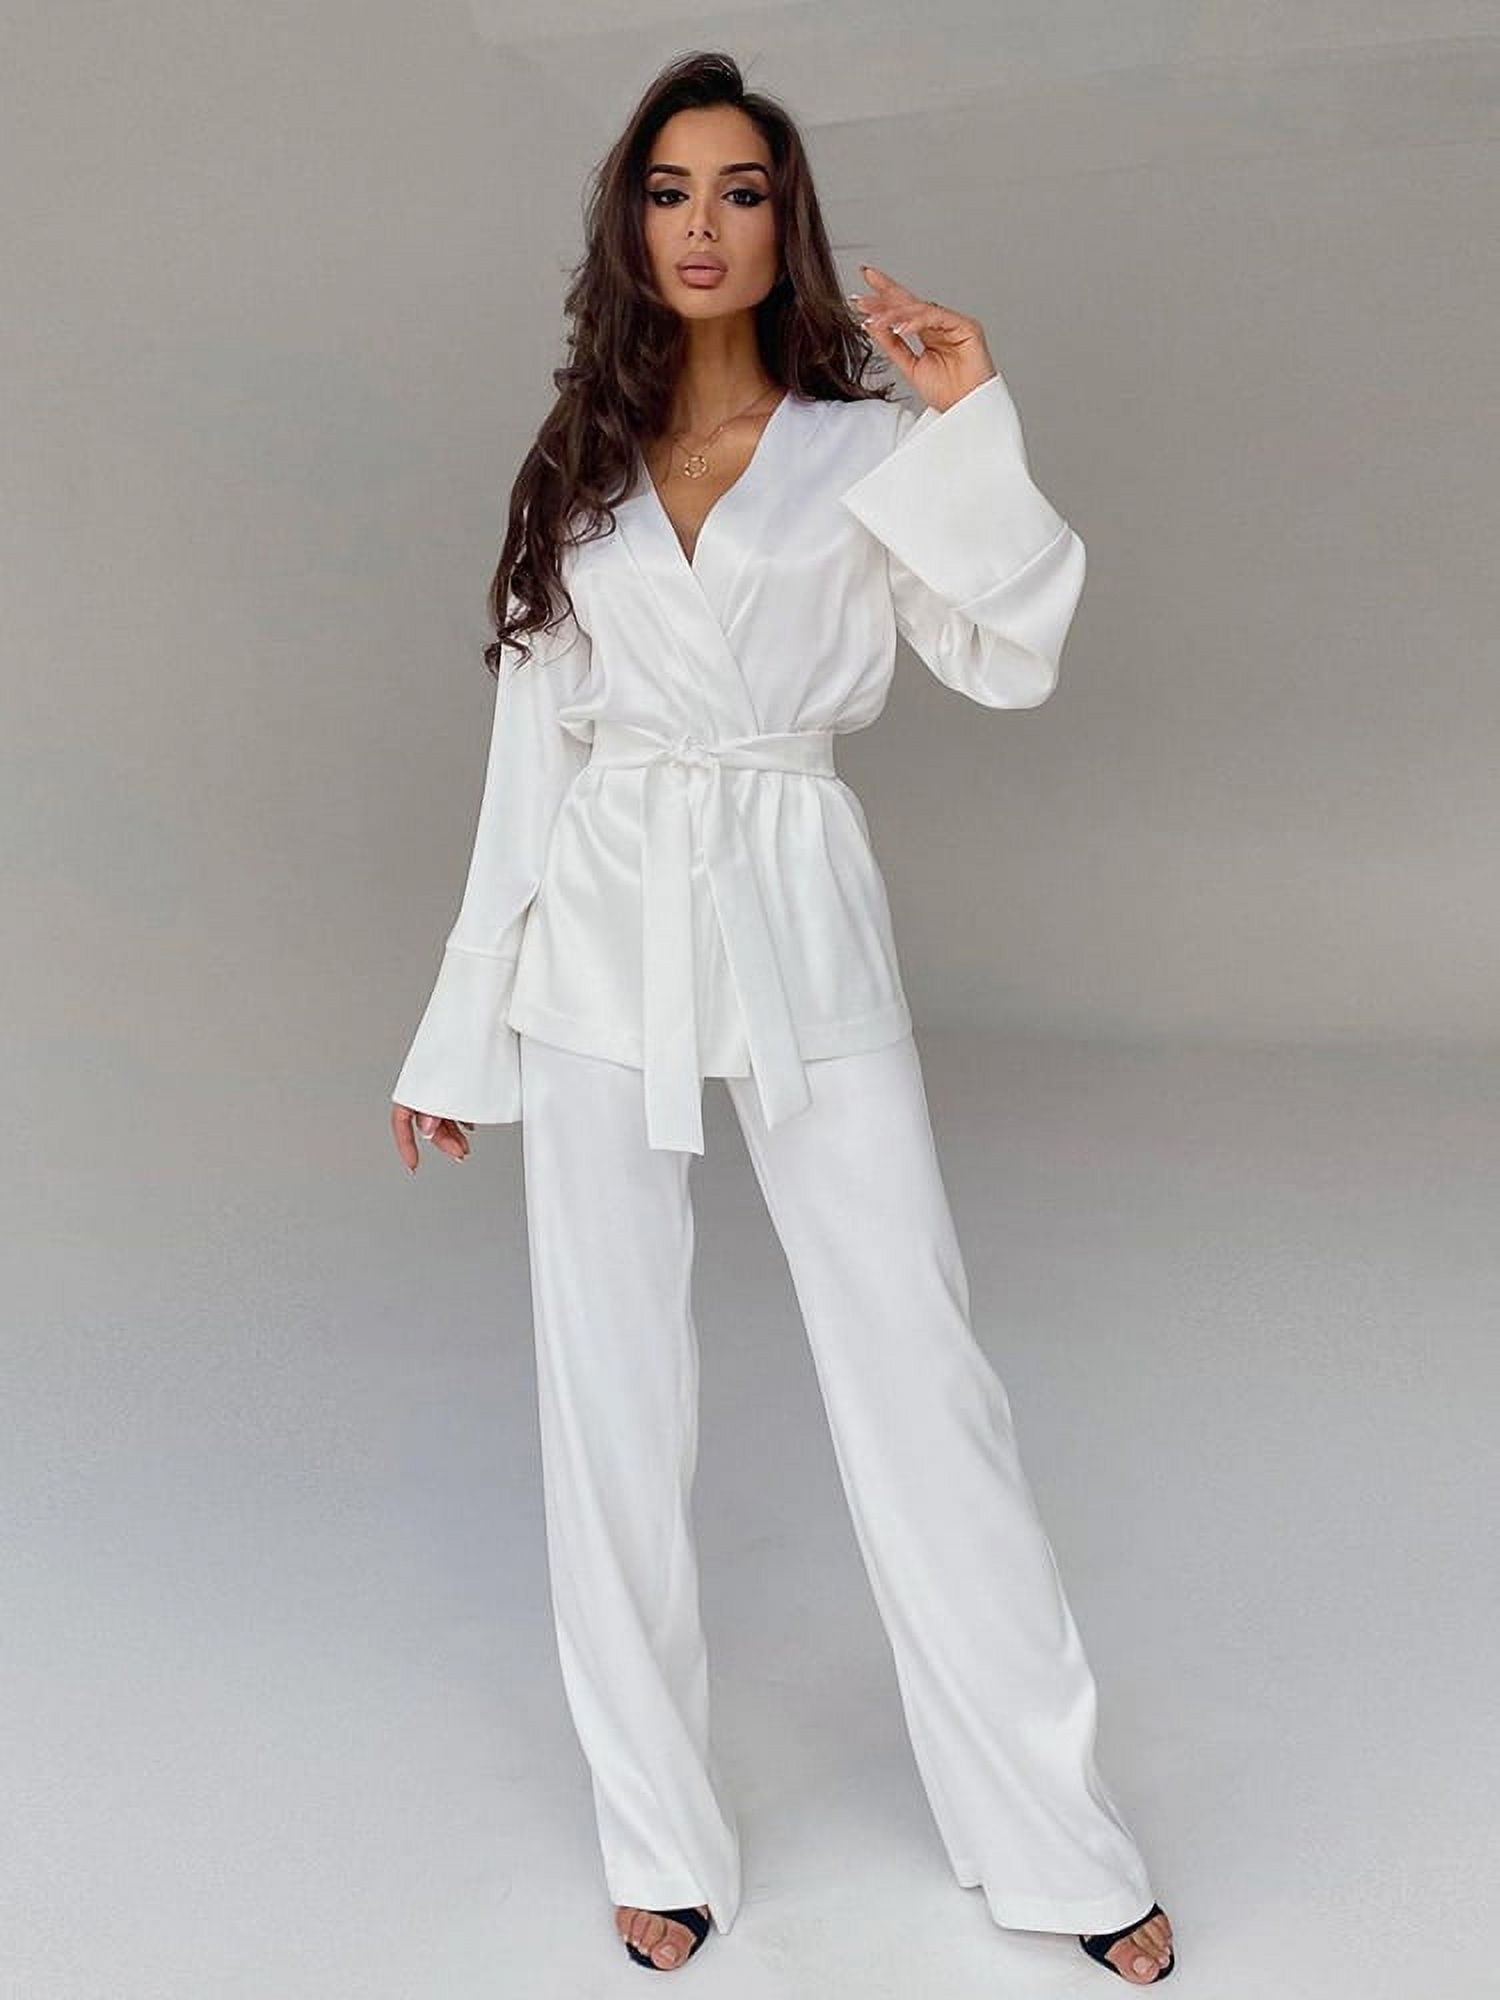 Fashion (White)QSROCIO Women's Pajamas Sling Dress Lace Edge